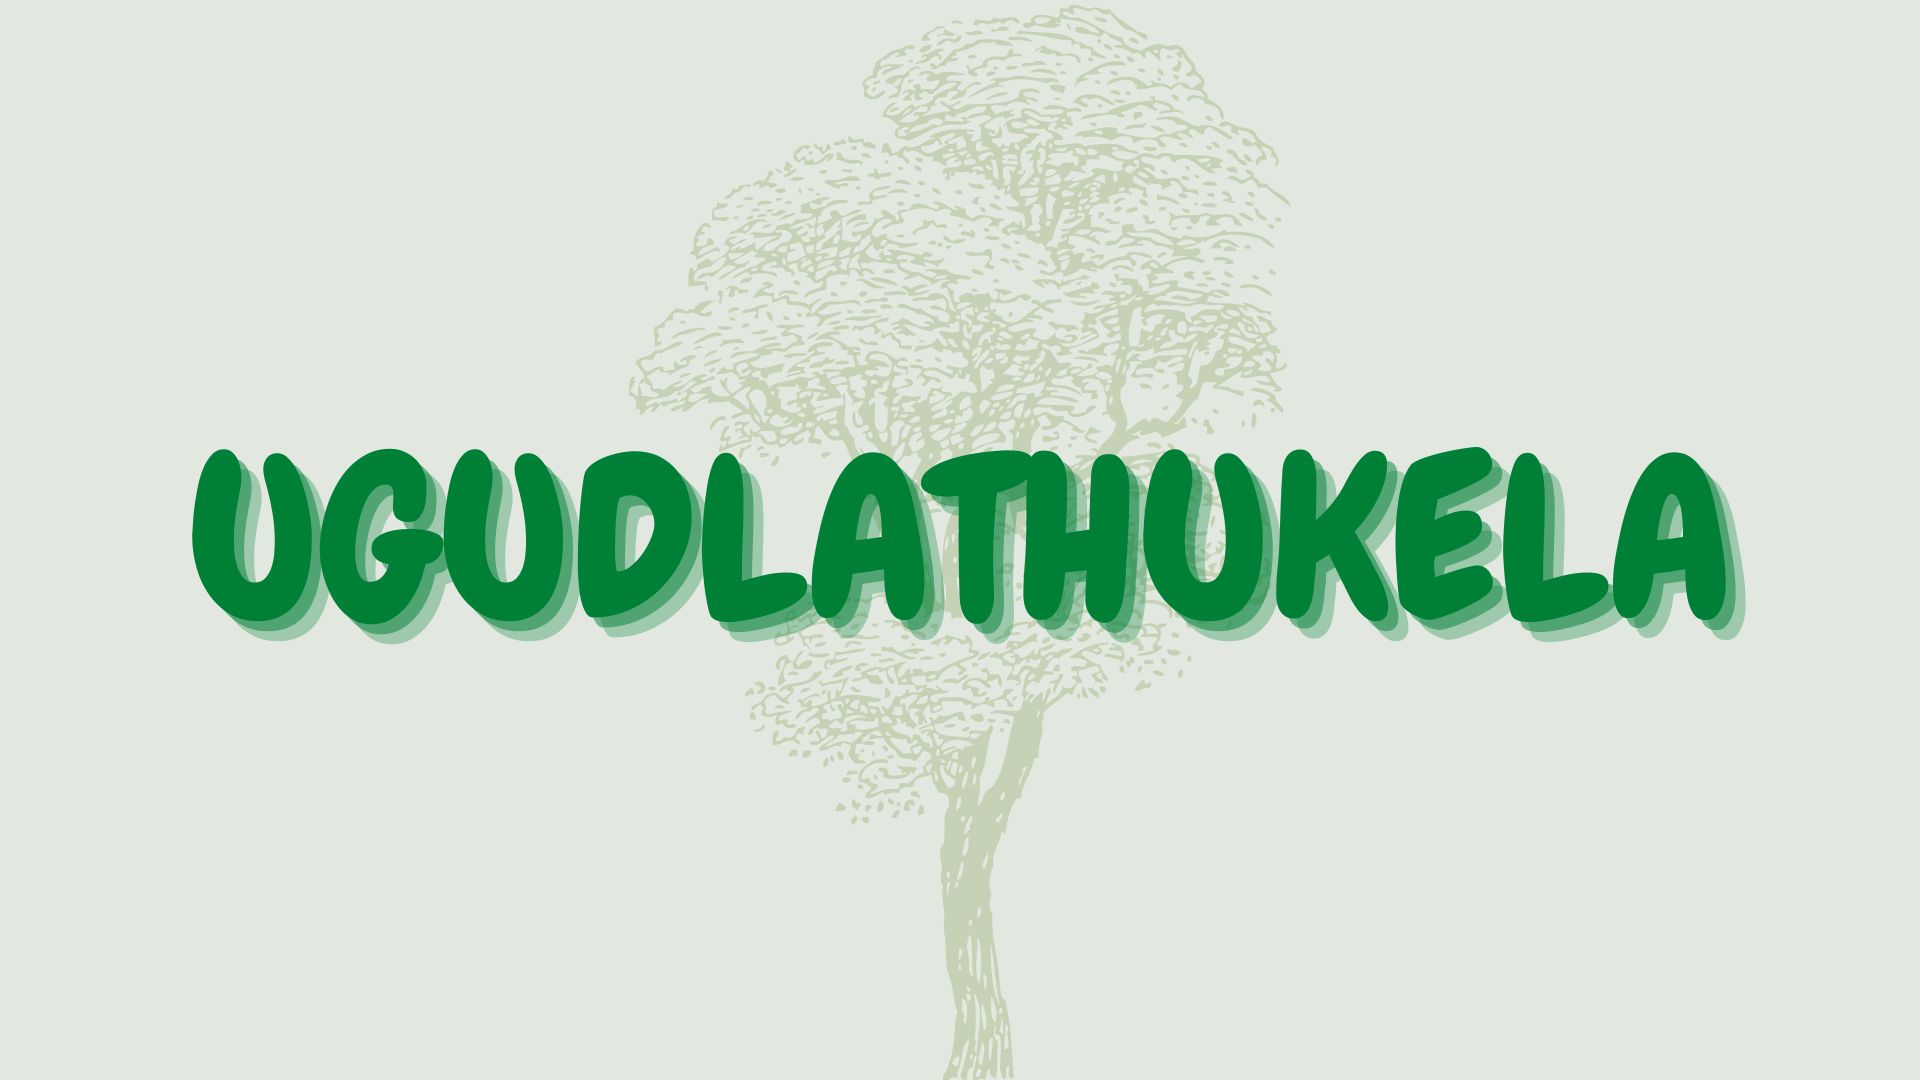 You are currently viewing Ugudlathukela